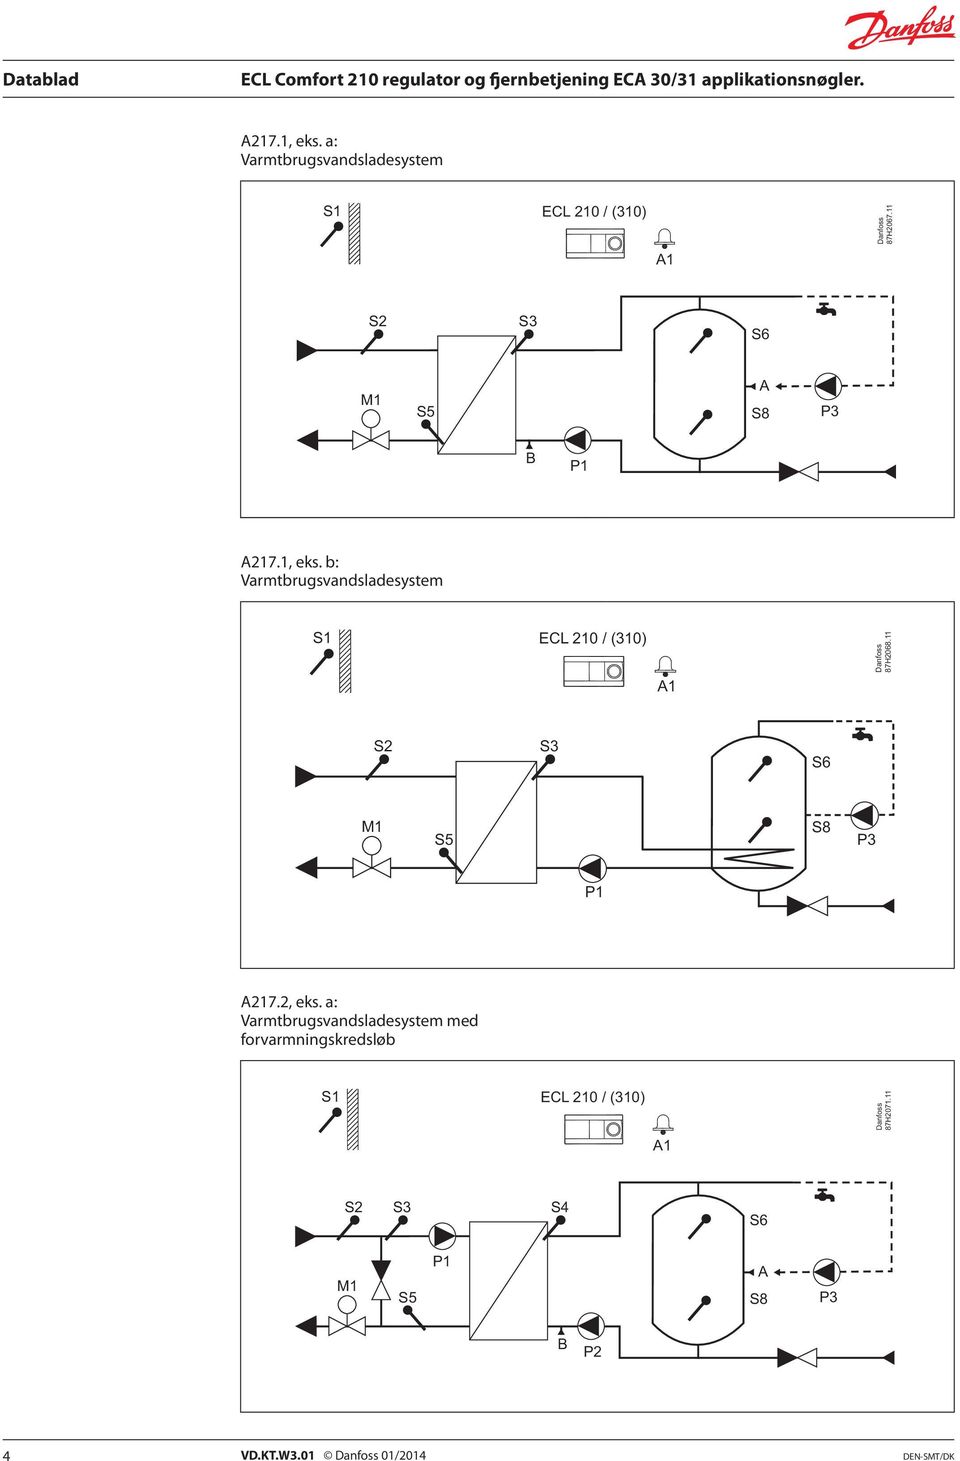 b: Varmtbrugsvandsladesystem ECL 210 / (310) 87H2068.11 A1 S2 S6 M1 P3 P1 A217.2, eks.